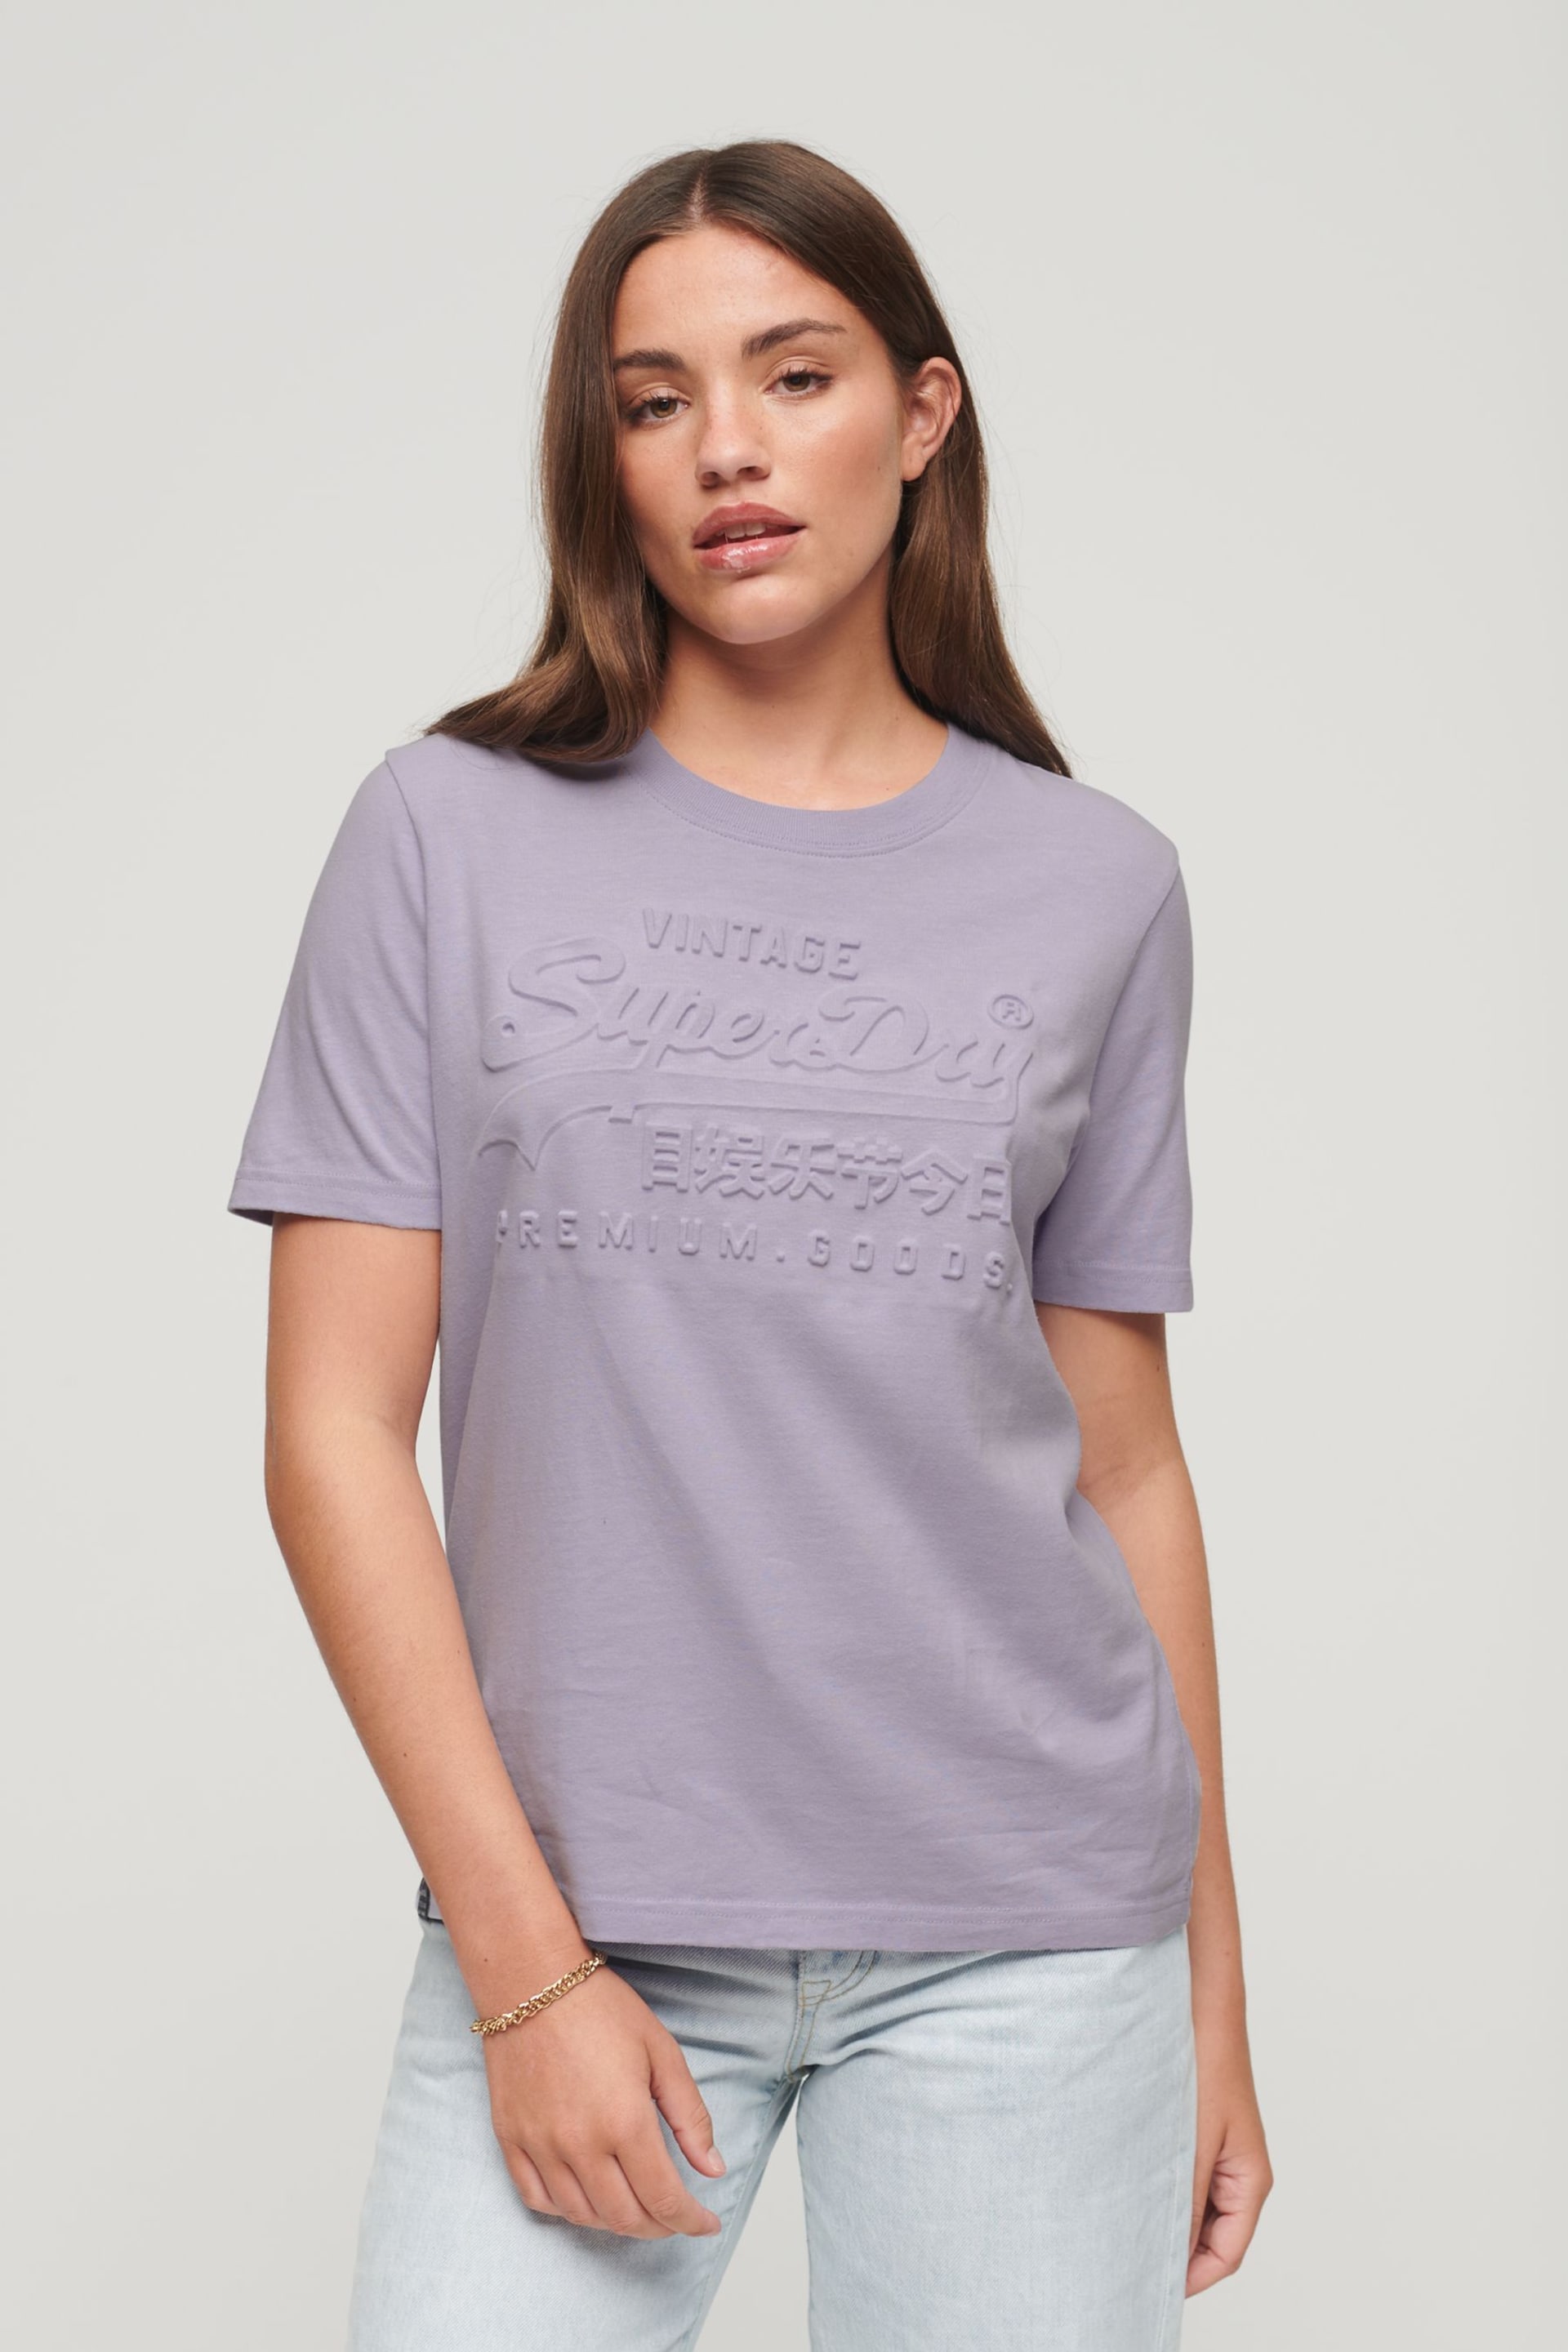 Superdry Purple Embossed Vintage Logo T-Shirt - Image 3 of 4